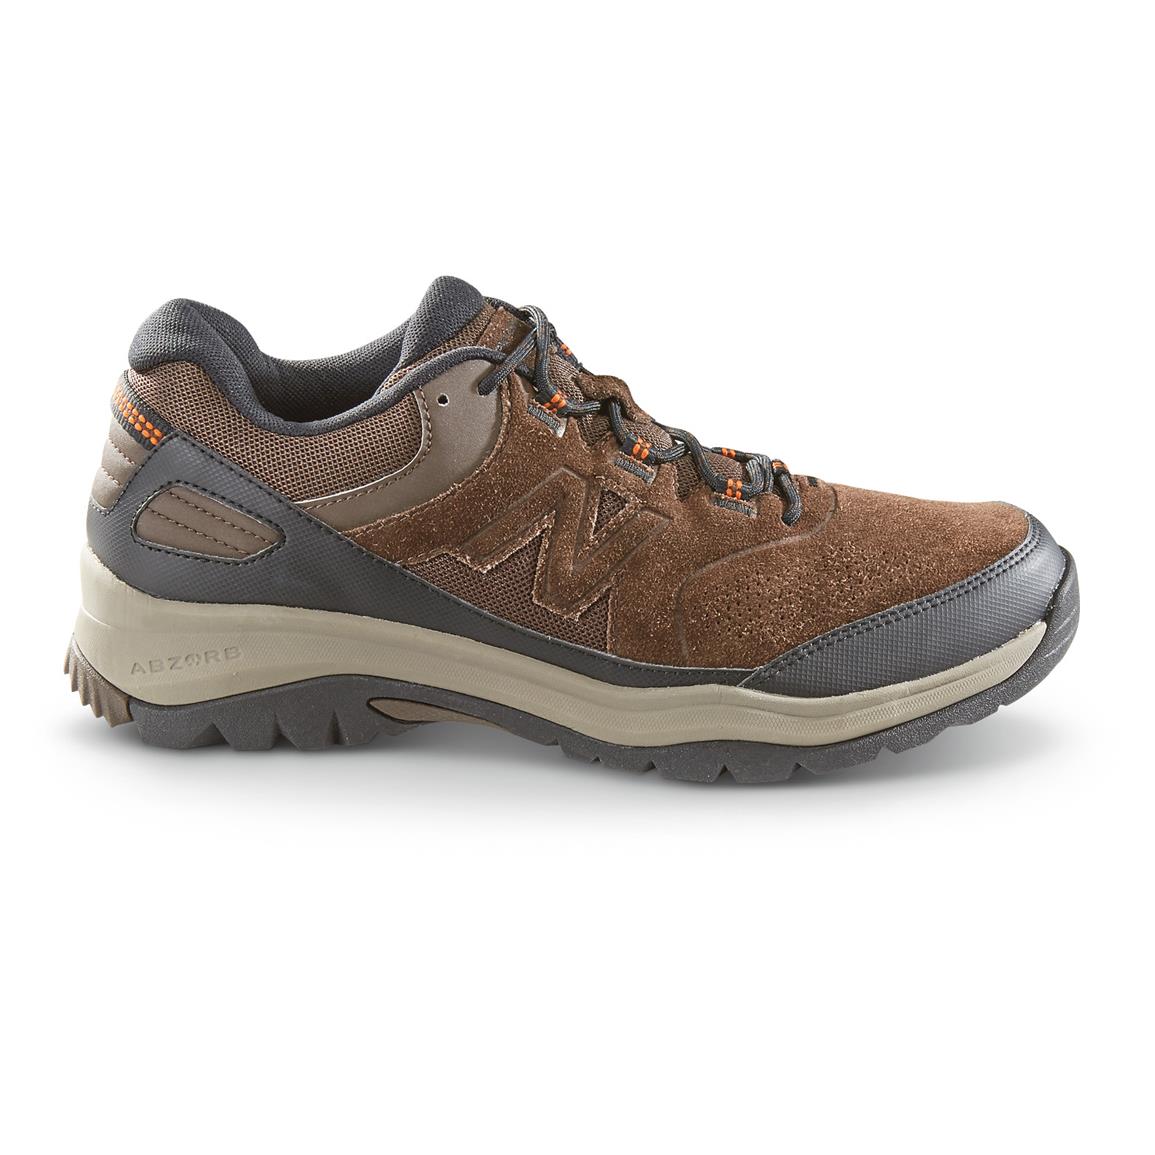 Men's New Balance Walker Shoes, Camo - 281555, Running Shoes & Sneakers ...